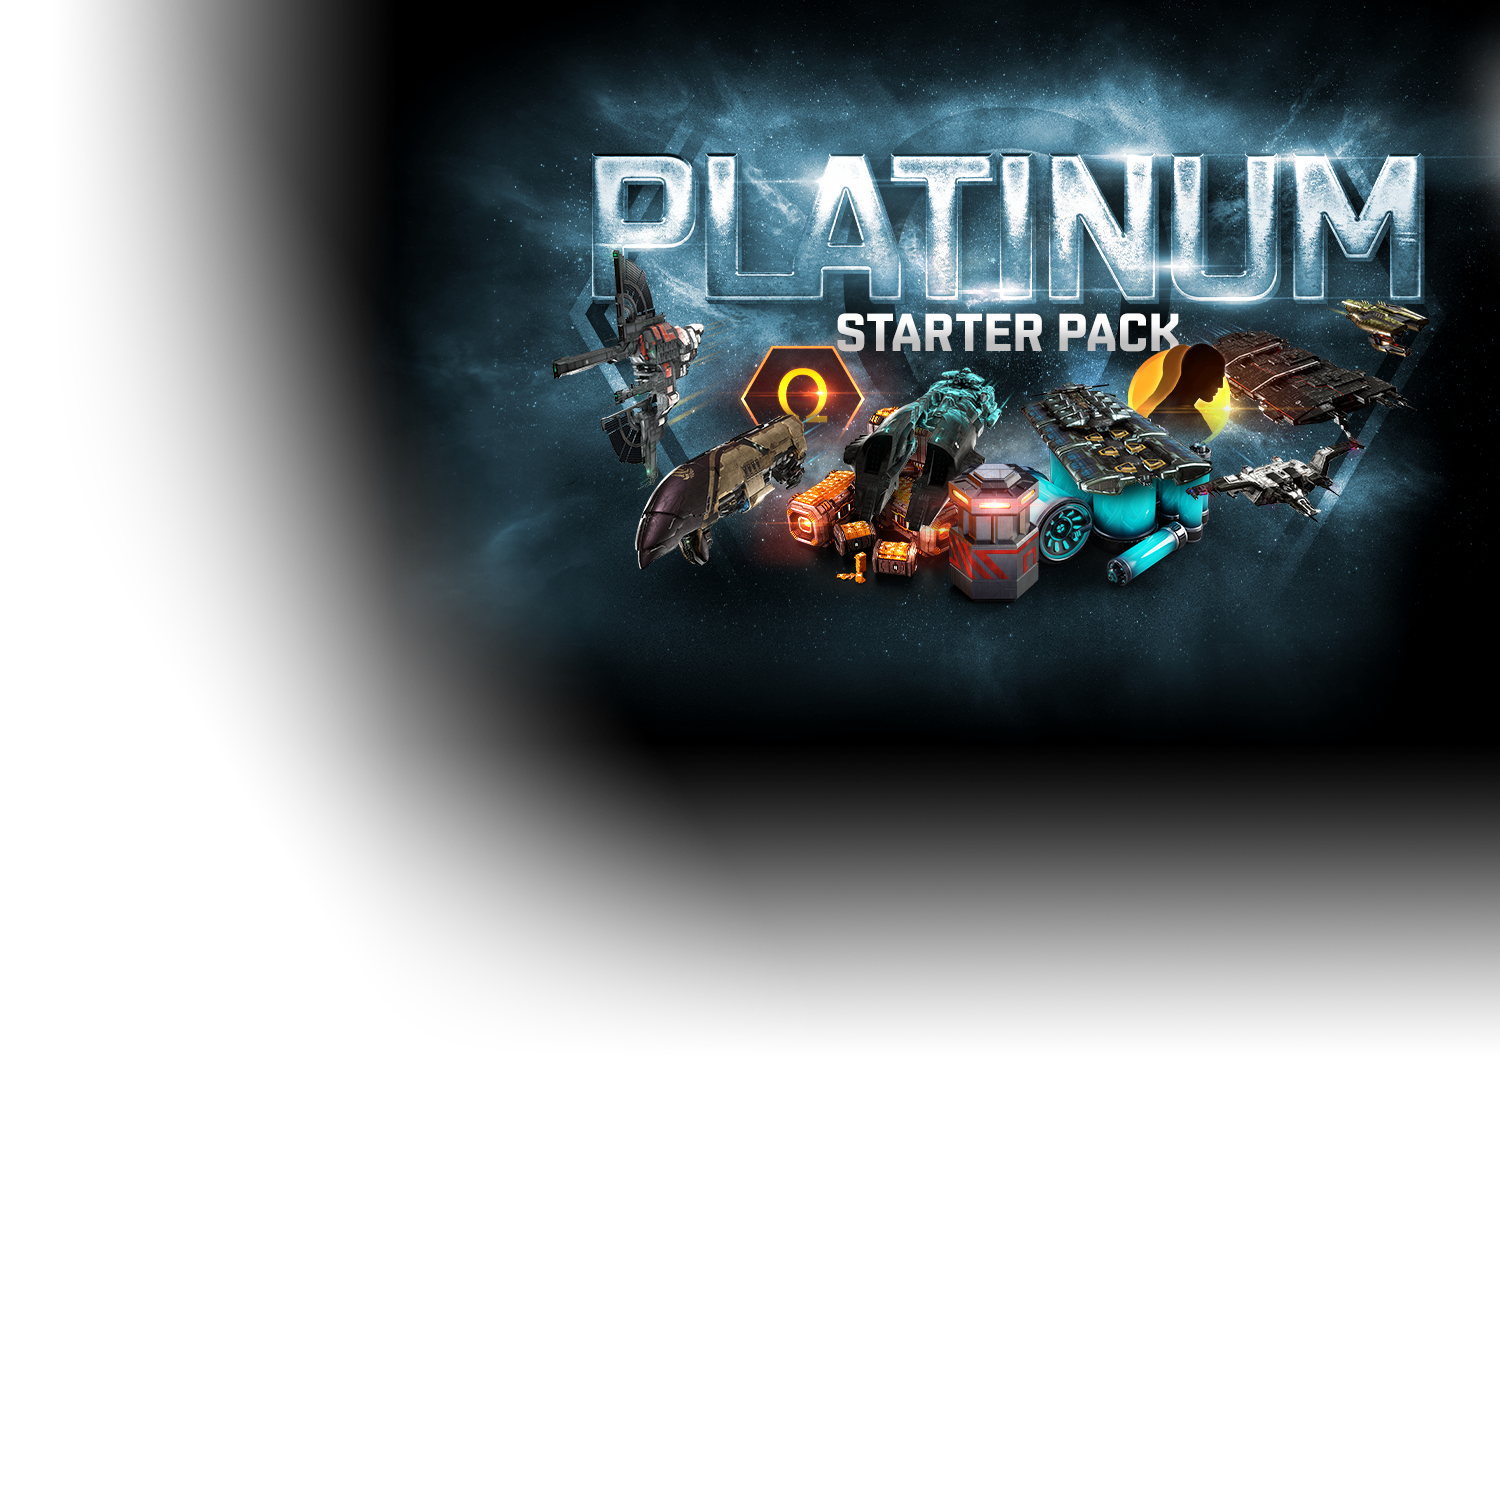 Platinum Starter Pack